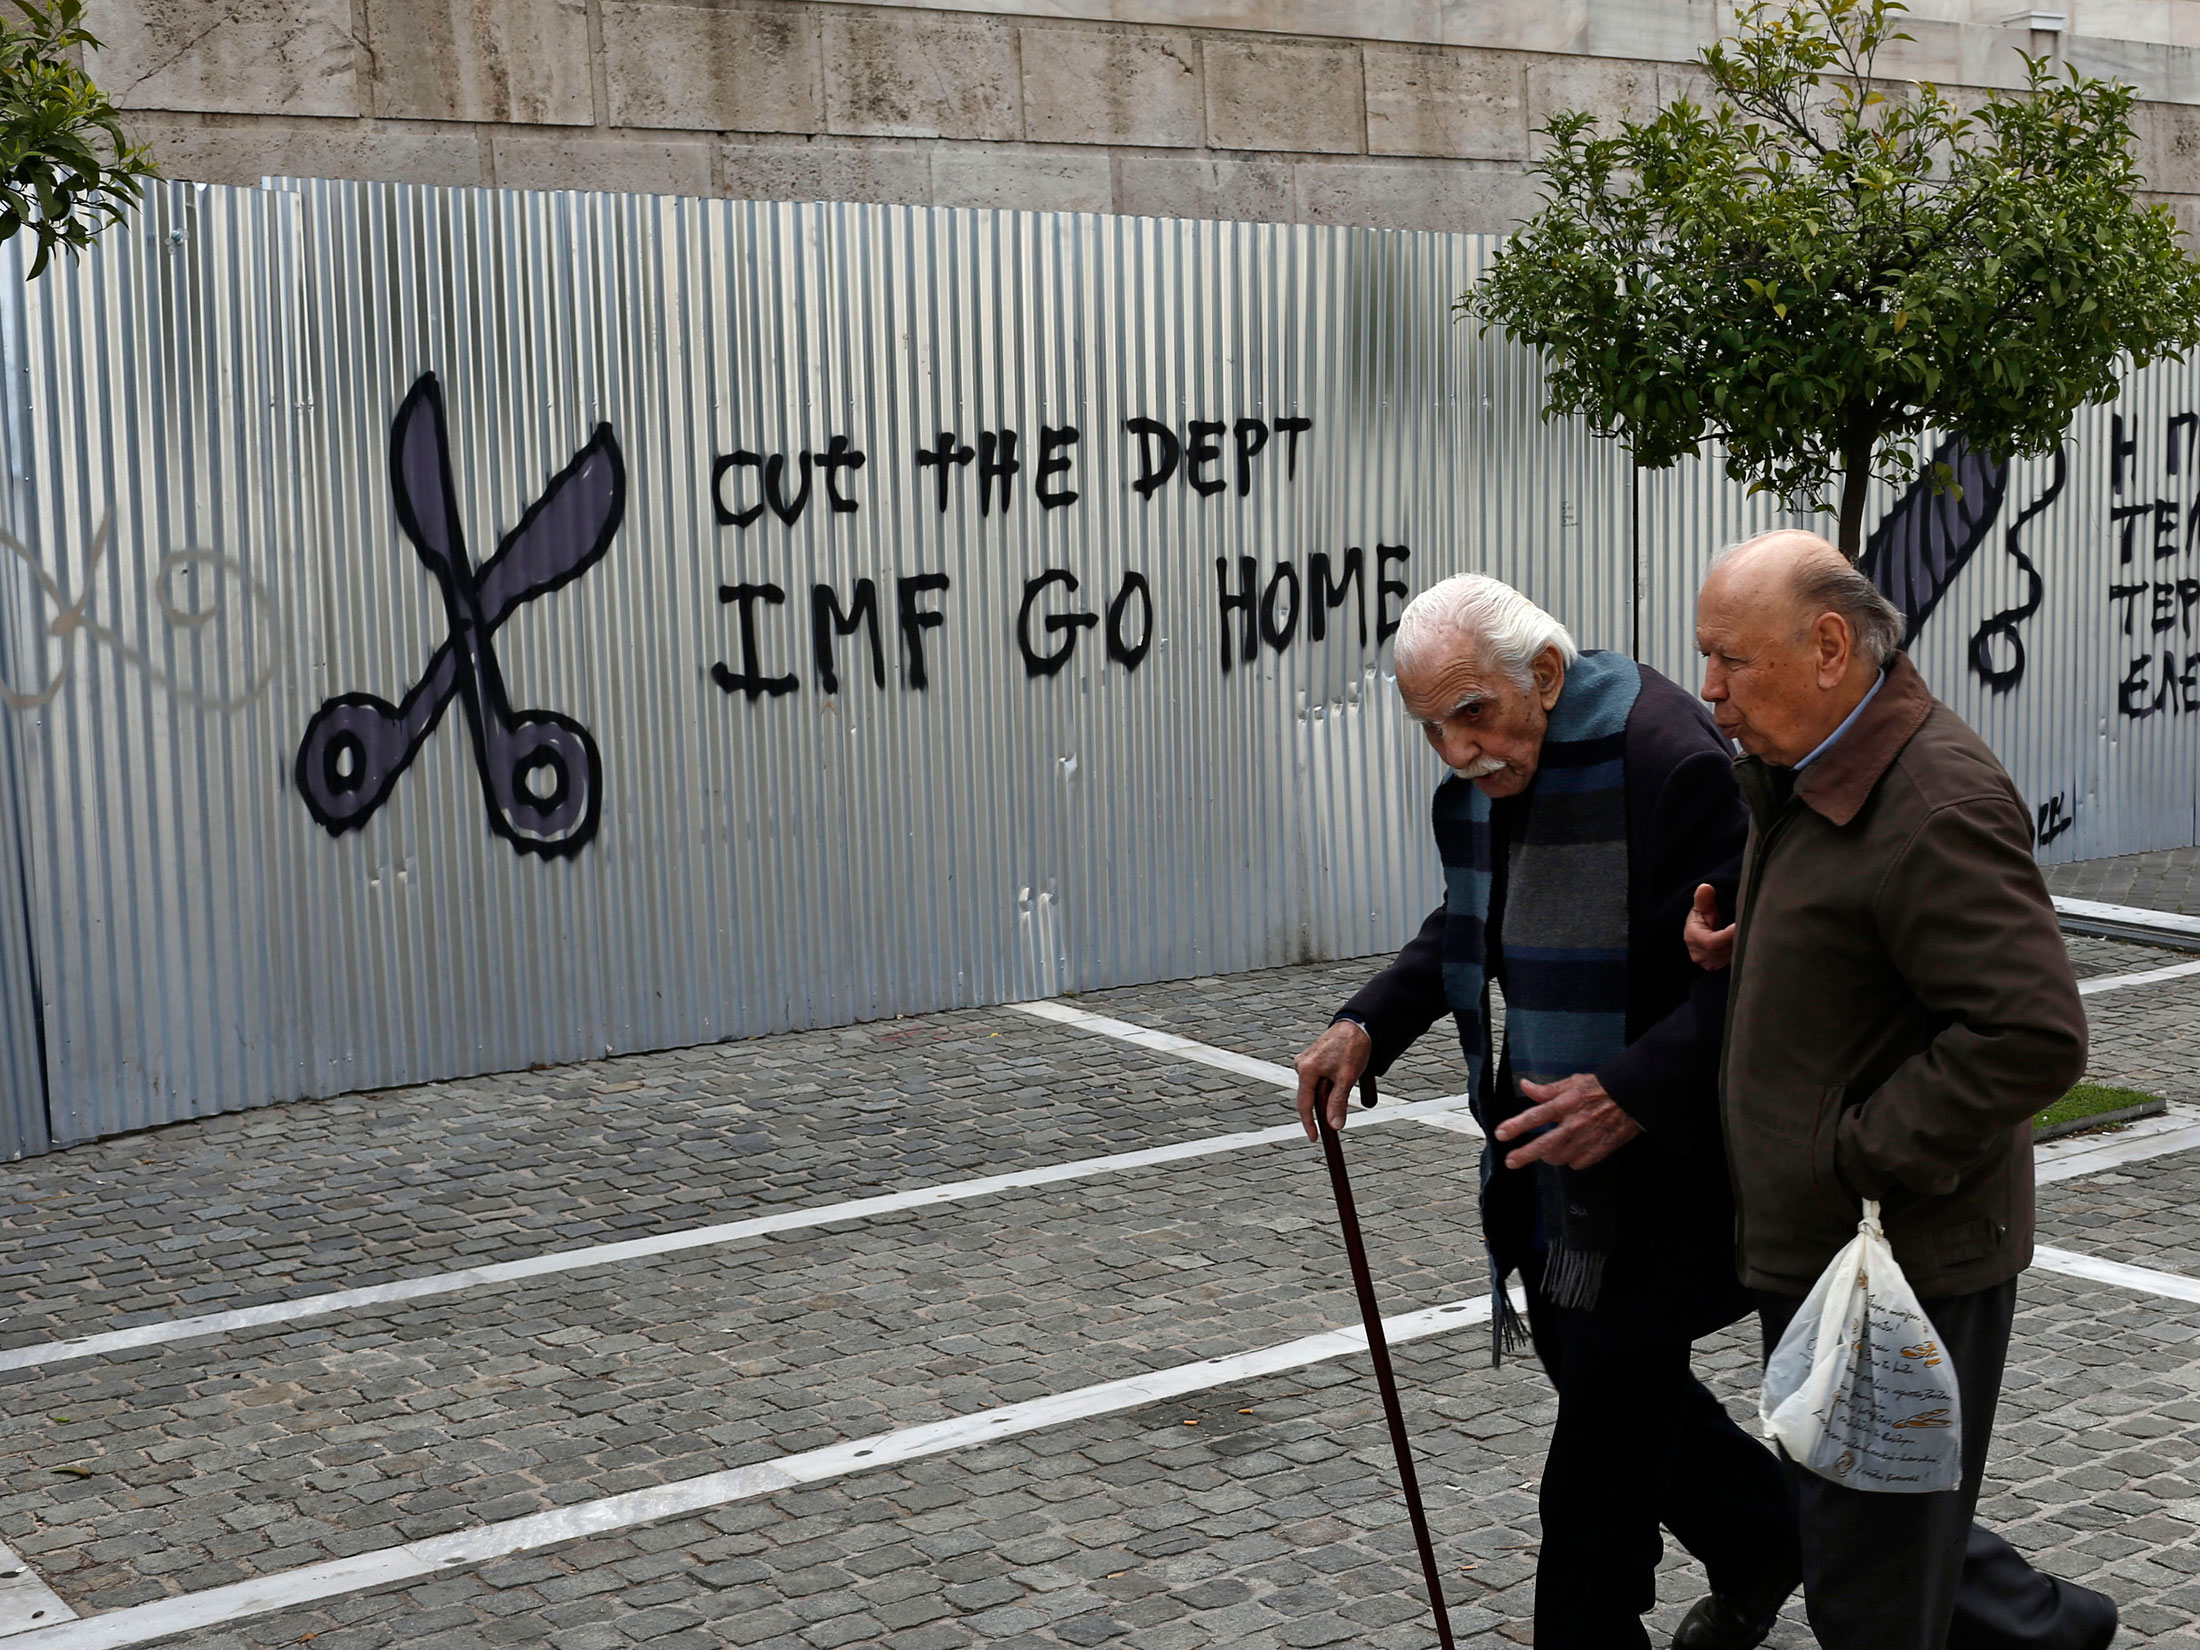 Two elderly men pass graffiti outside the University of Athens.
